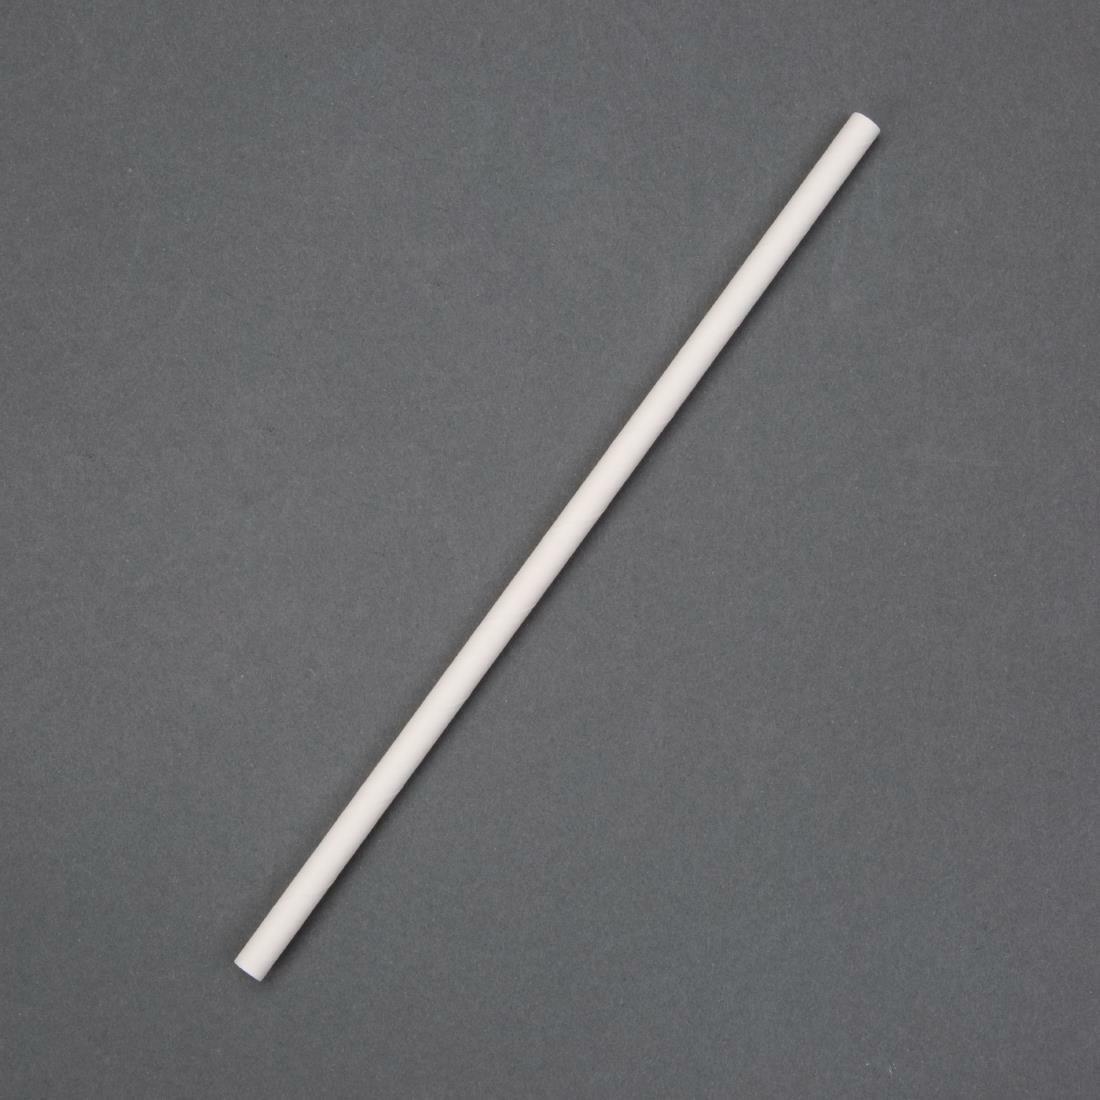 Black Bubble Tea Straws - Plastic Straws 9'' Boba Tea Straws (10mm) - Black  - 3,500 count